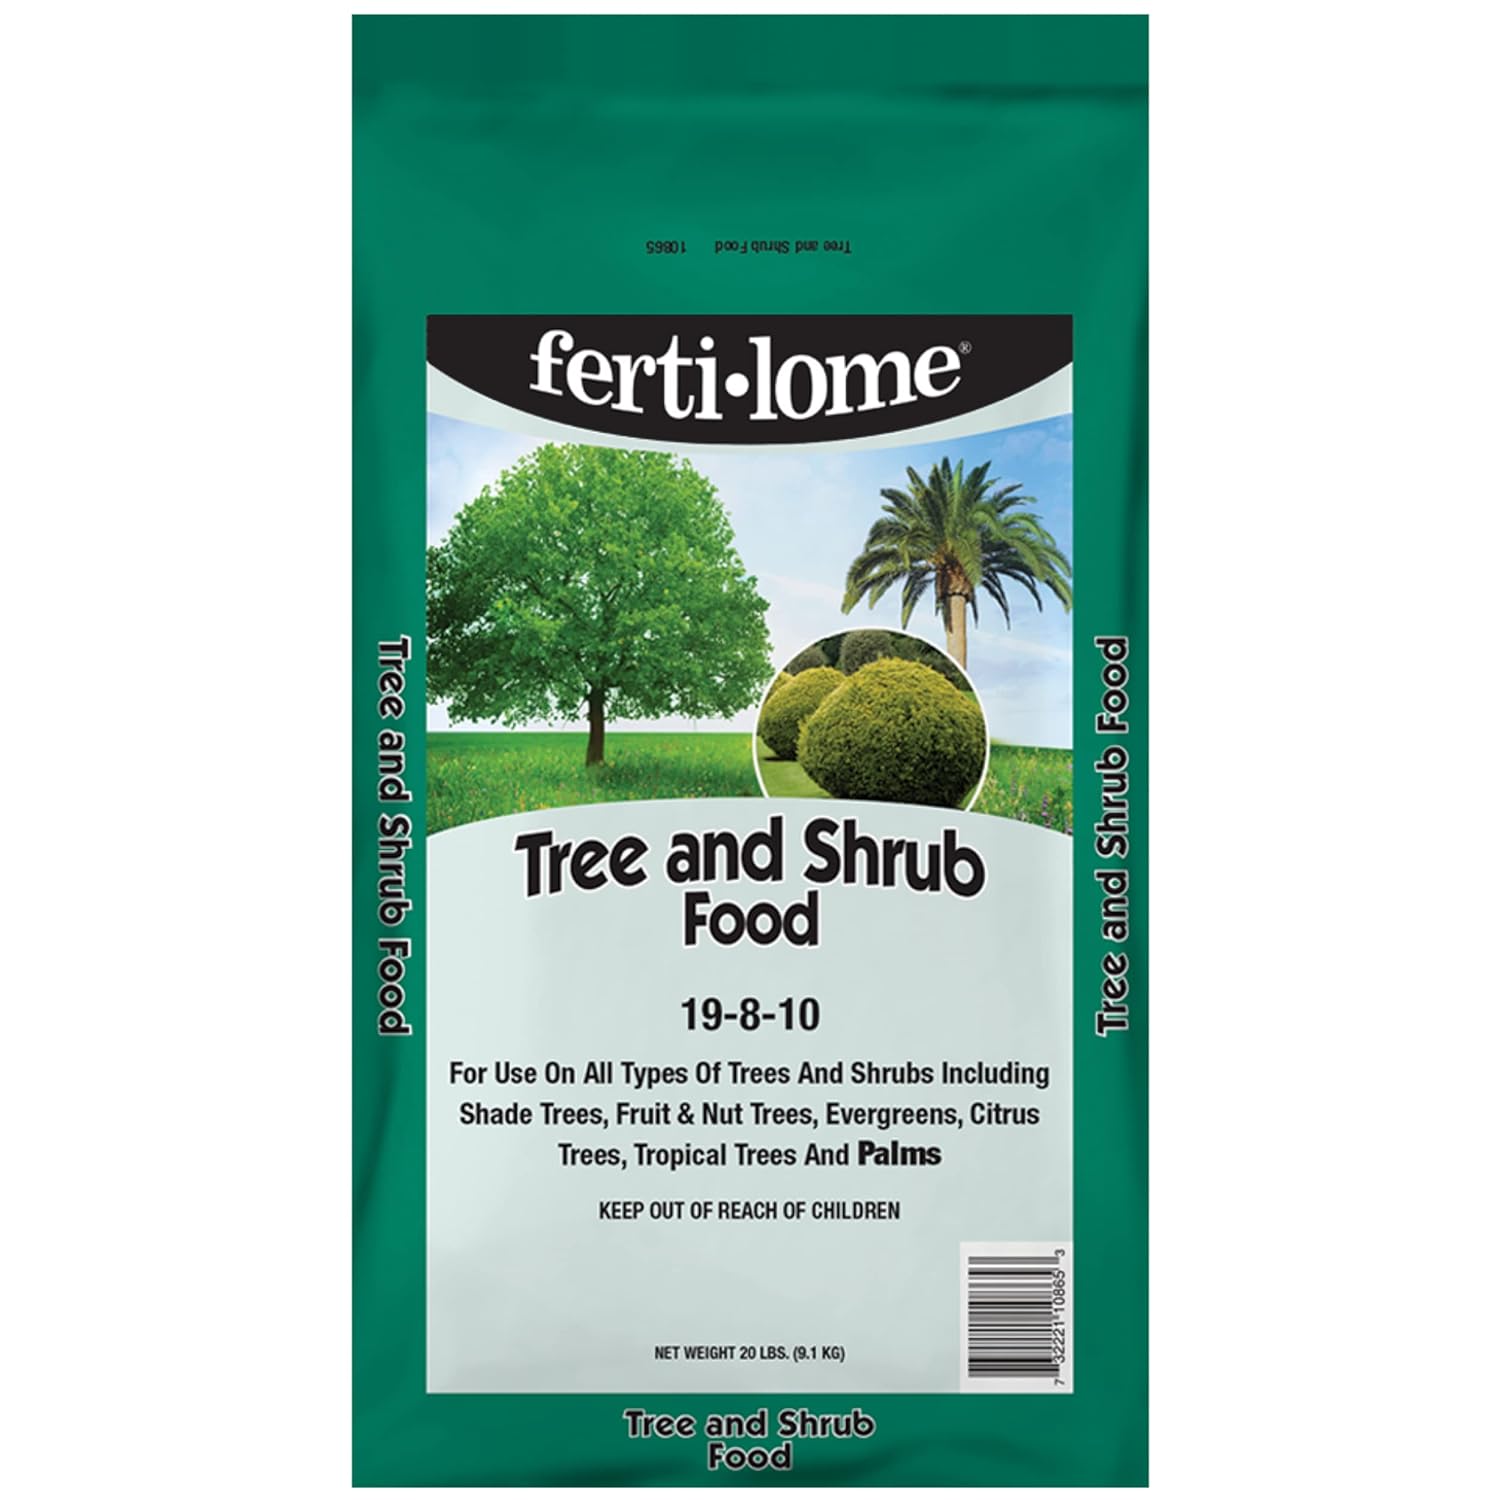 VPG Fertilome Tree and Shrub Food Outdoor Fertilizer, 19-8-10